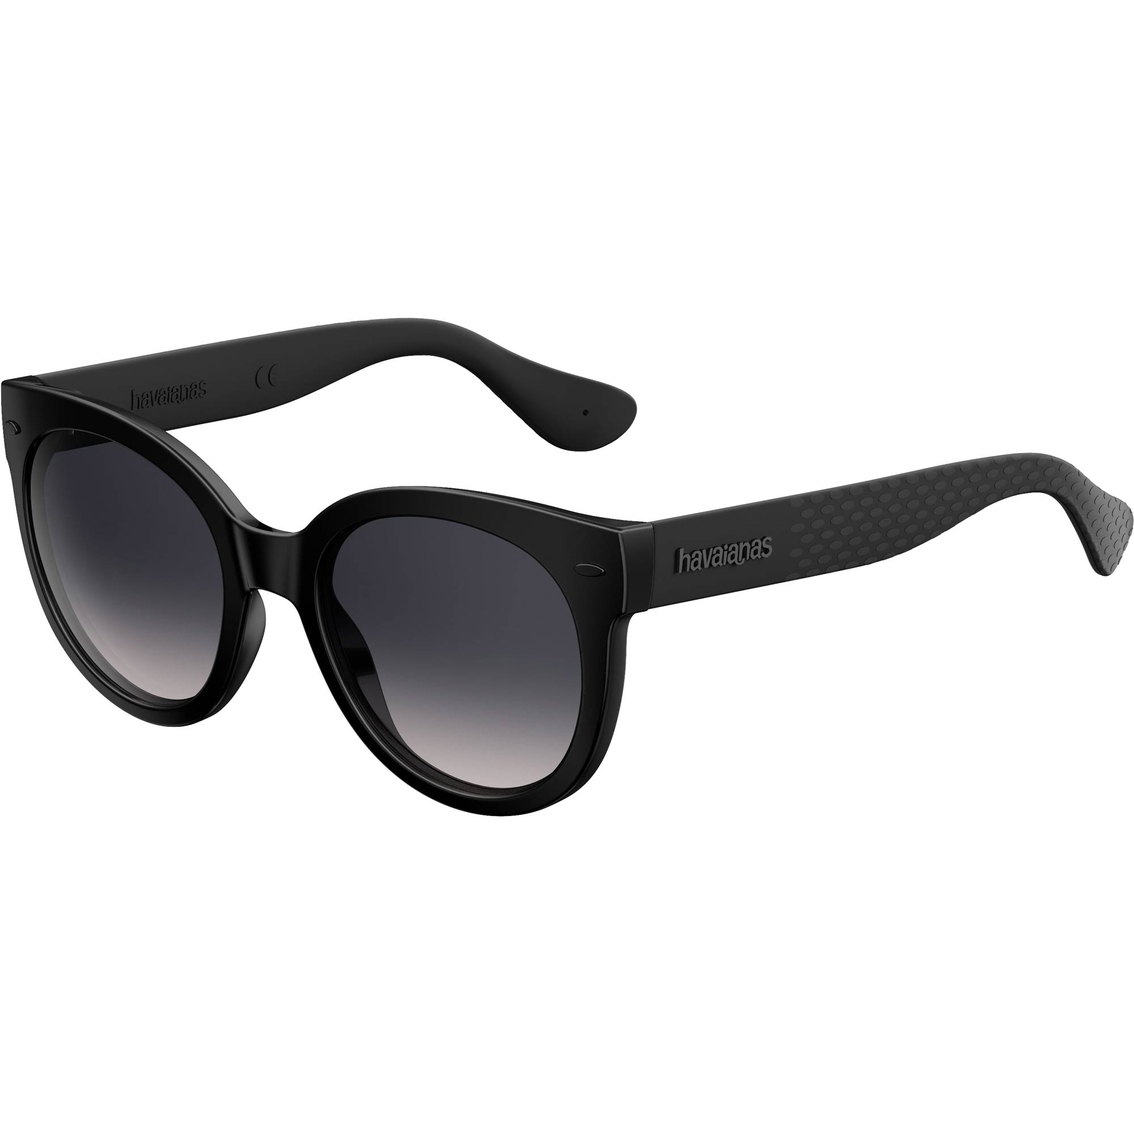 Havaianas Noronha Sunglasses | Sunglasses | Clothing & Accessories ...